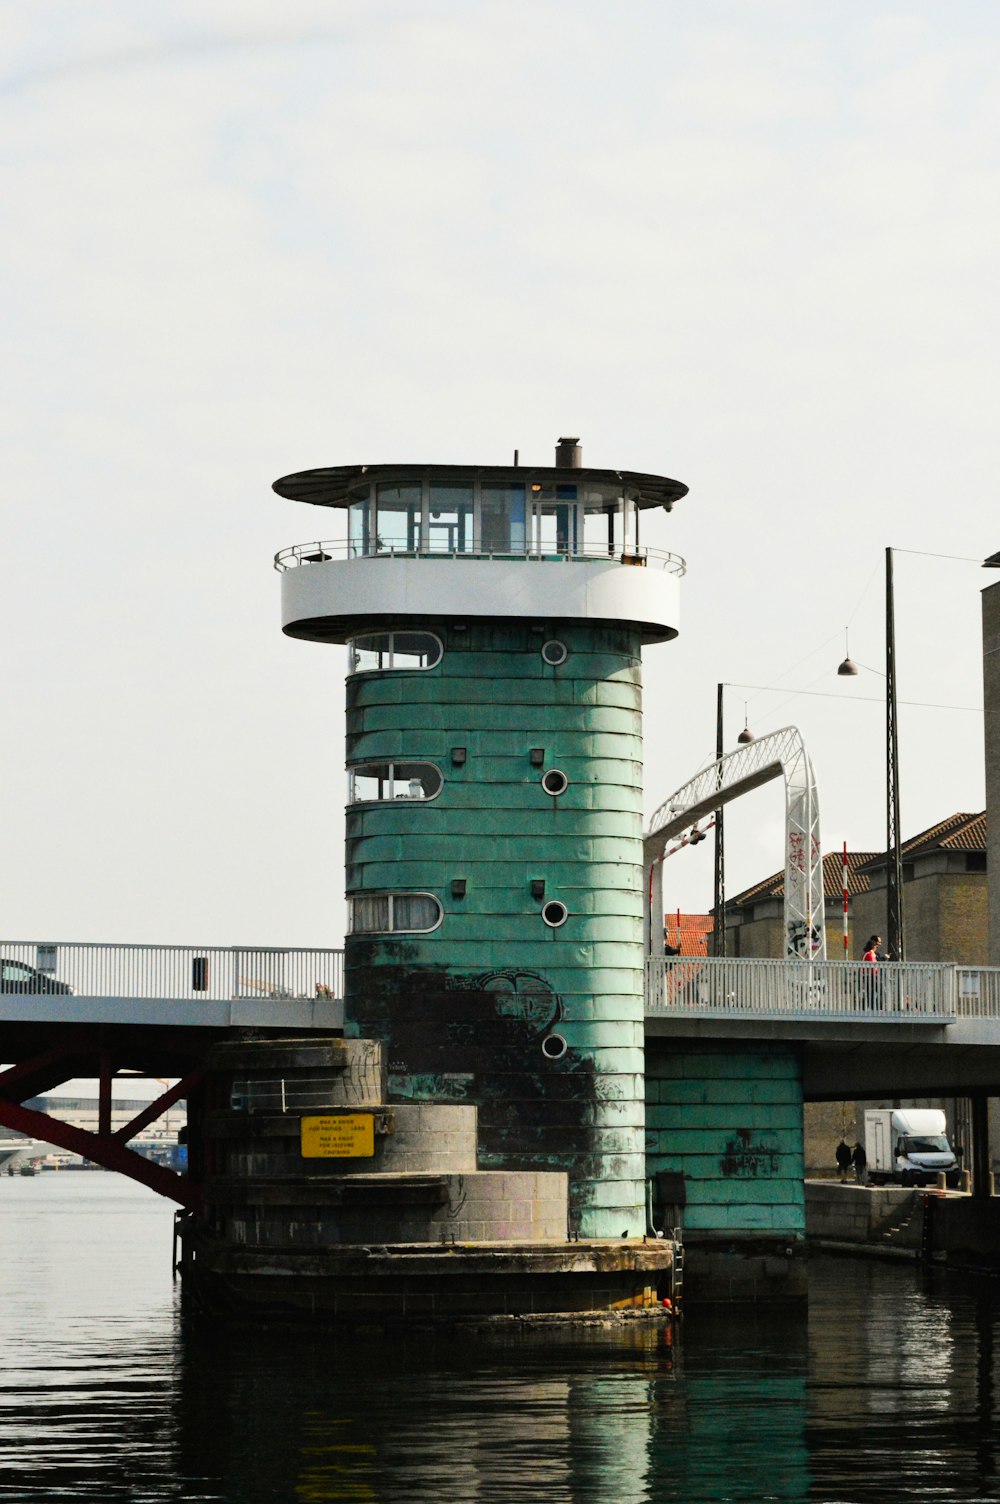 a lighthouse on a dock